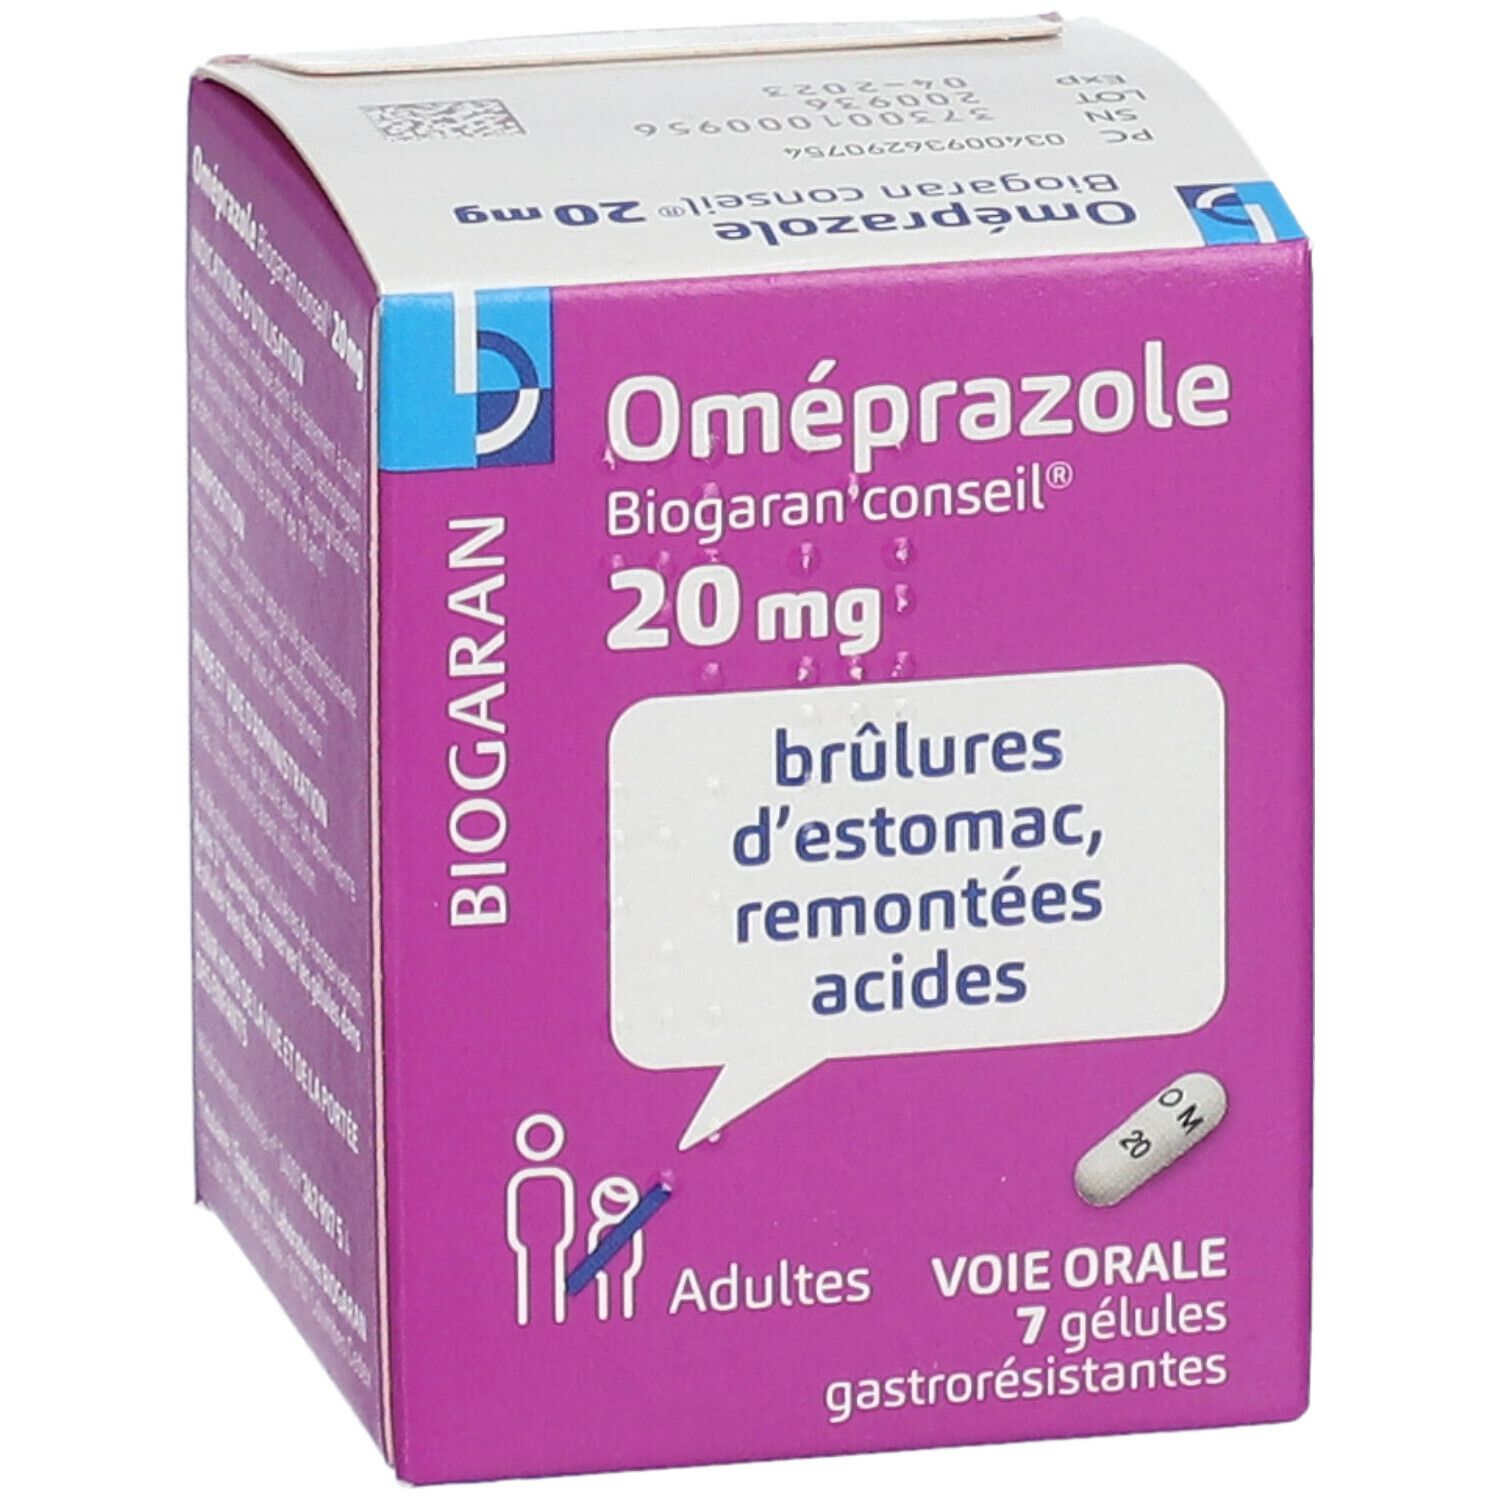 Omeprazole Biogaran Conseil® 20 mg